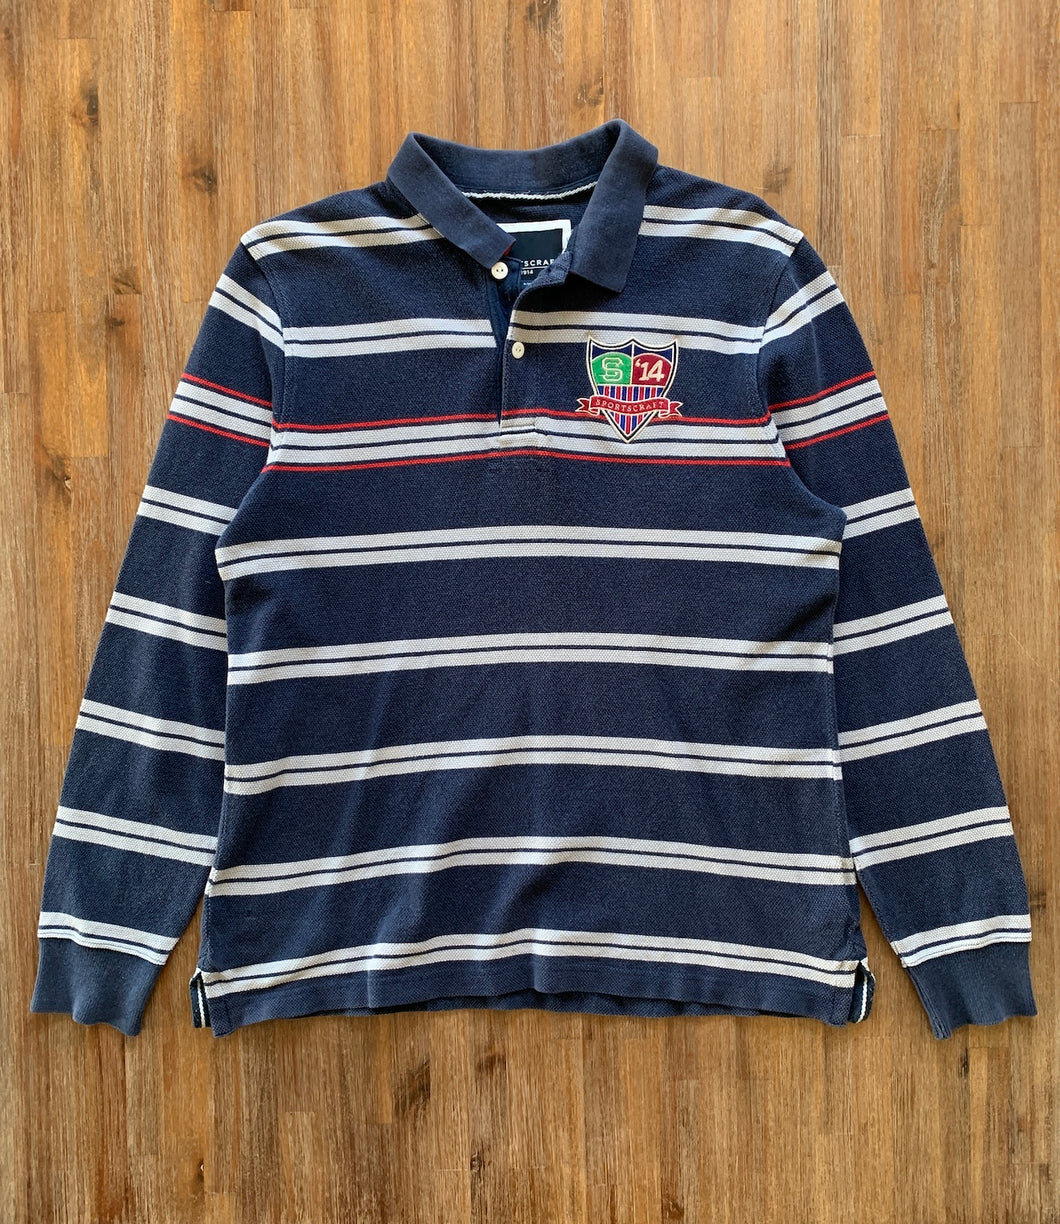 SPORTSCRAFT Size S / M Long Sleeve Polo Shirt in Blue Mens JAN54